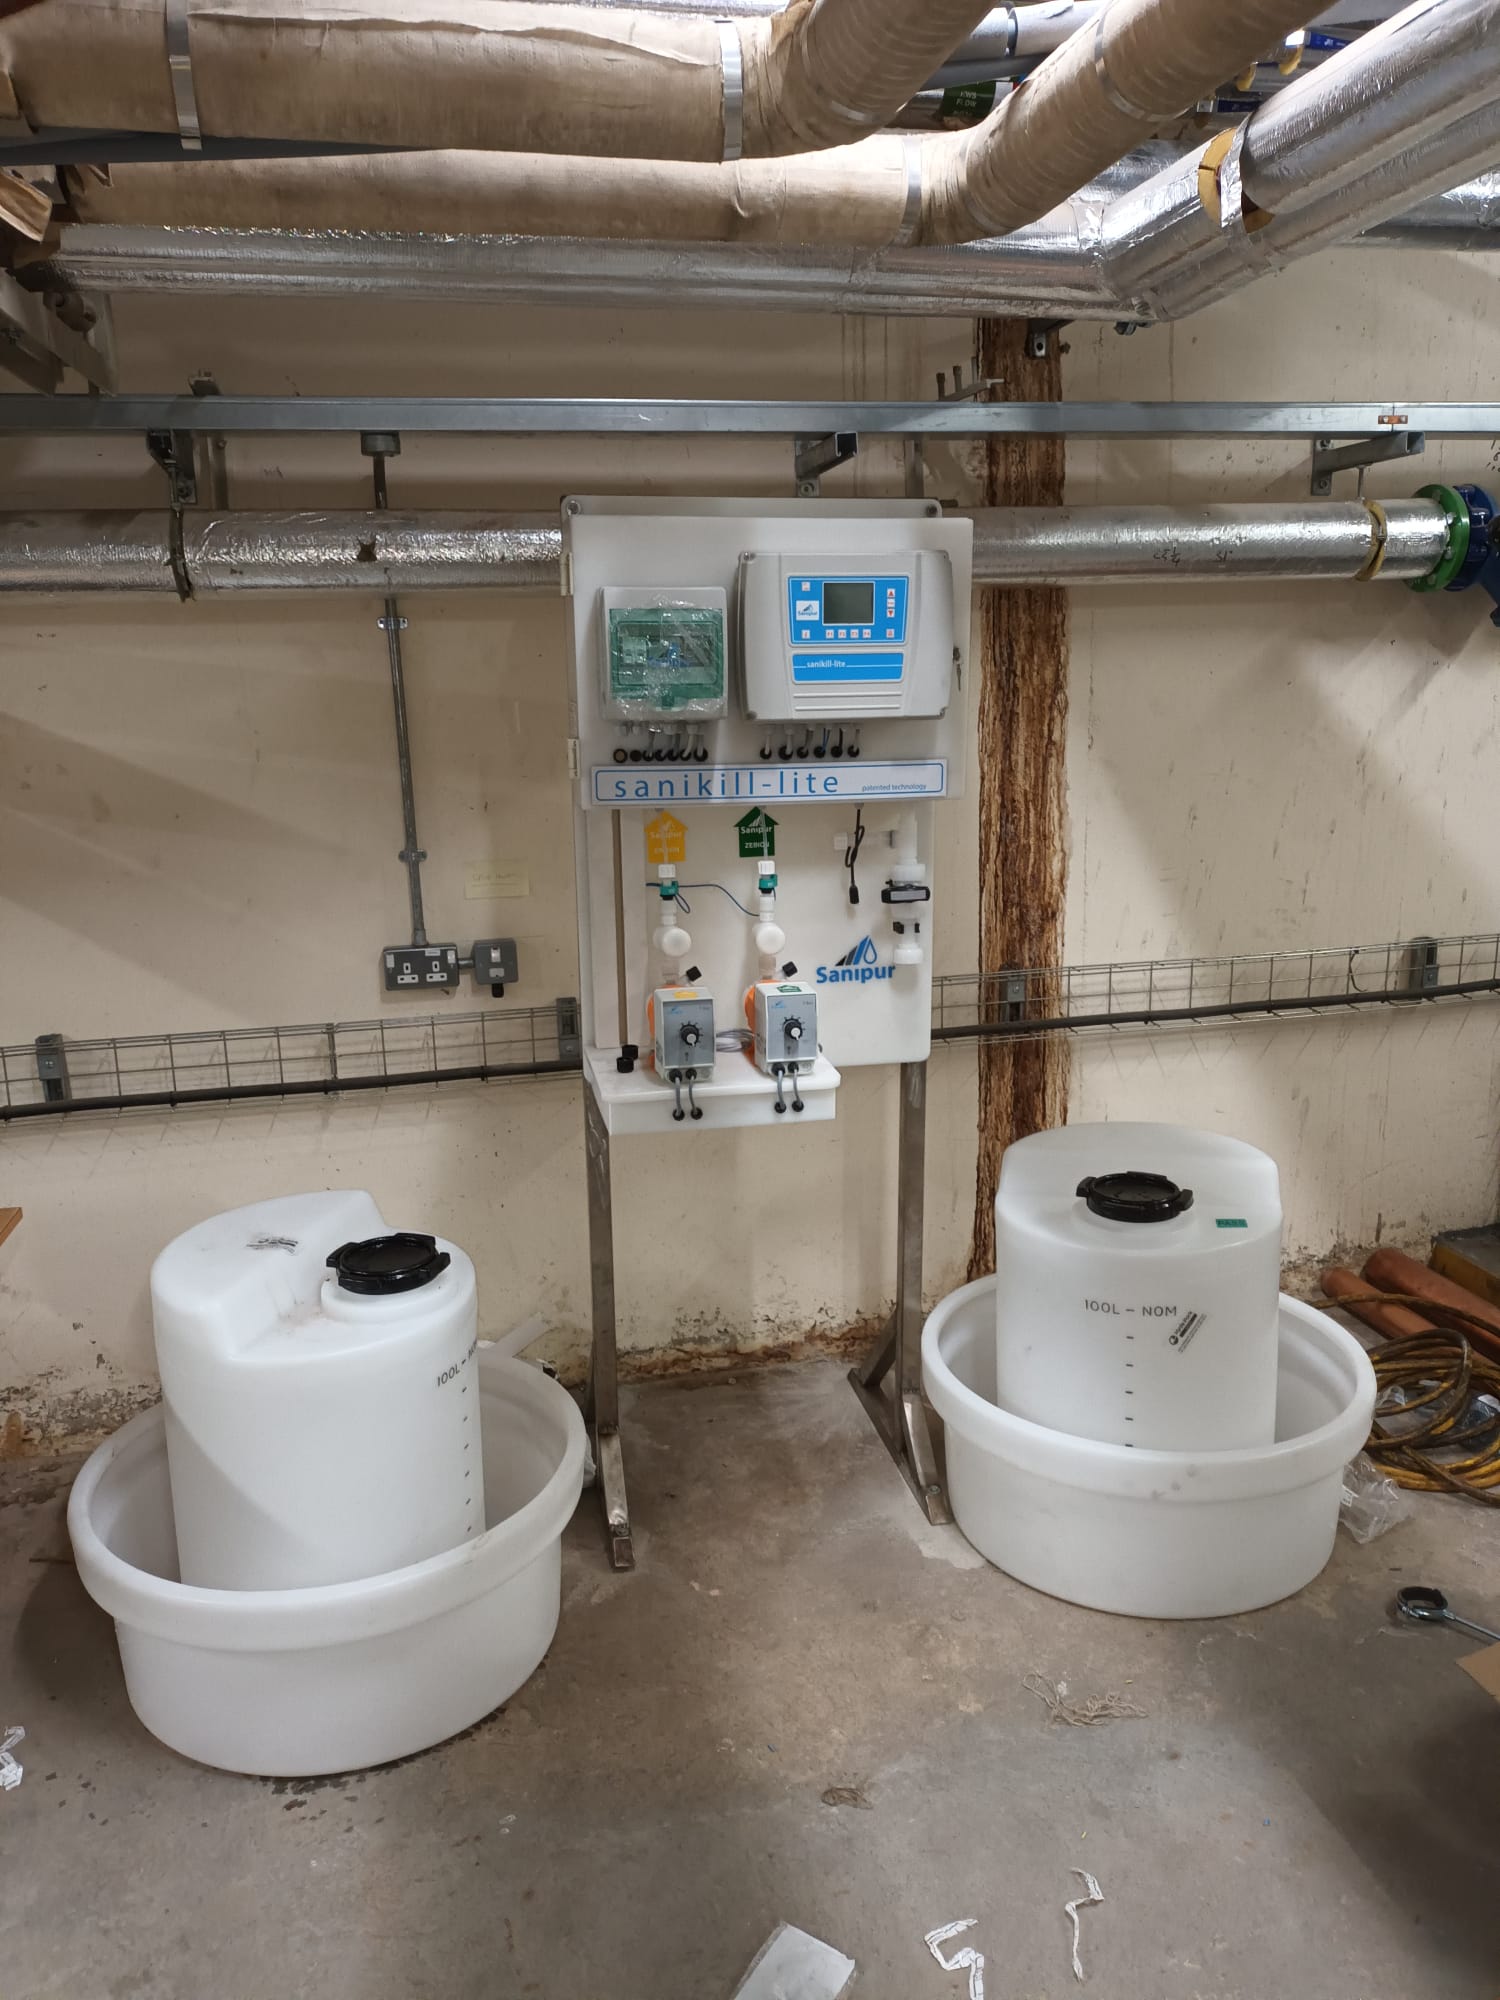 Sanipur monochloramine water treatment unit